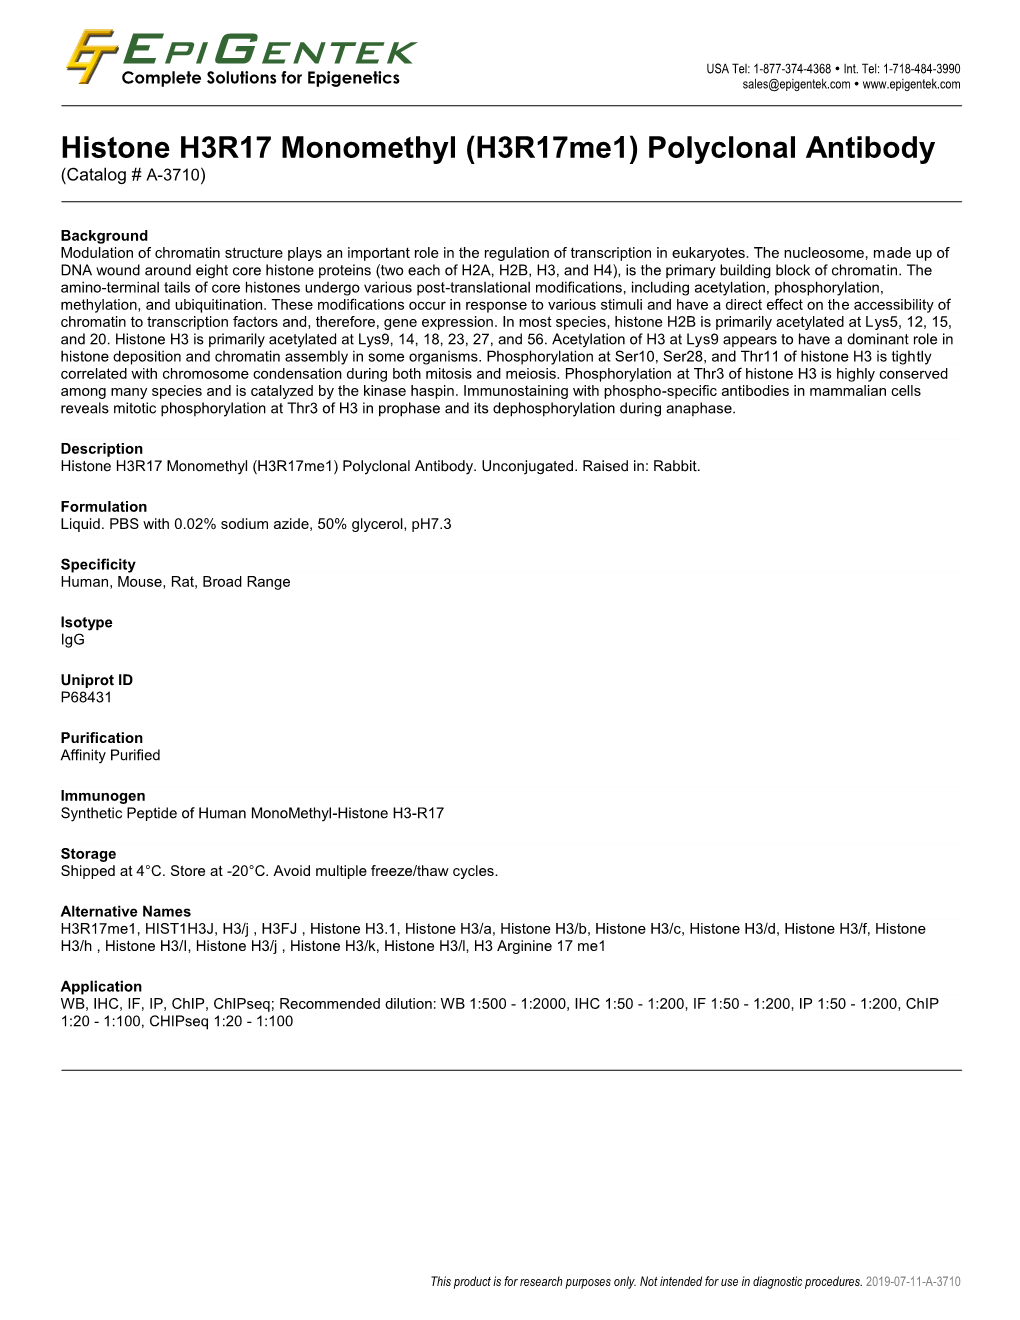 Histone H3R17 Monomethyl (H3r17me1) Polyclonal Antibody (Catalog # A-3710)